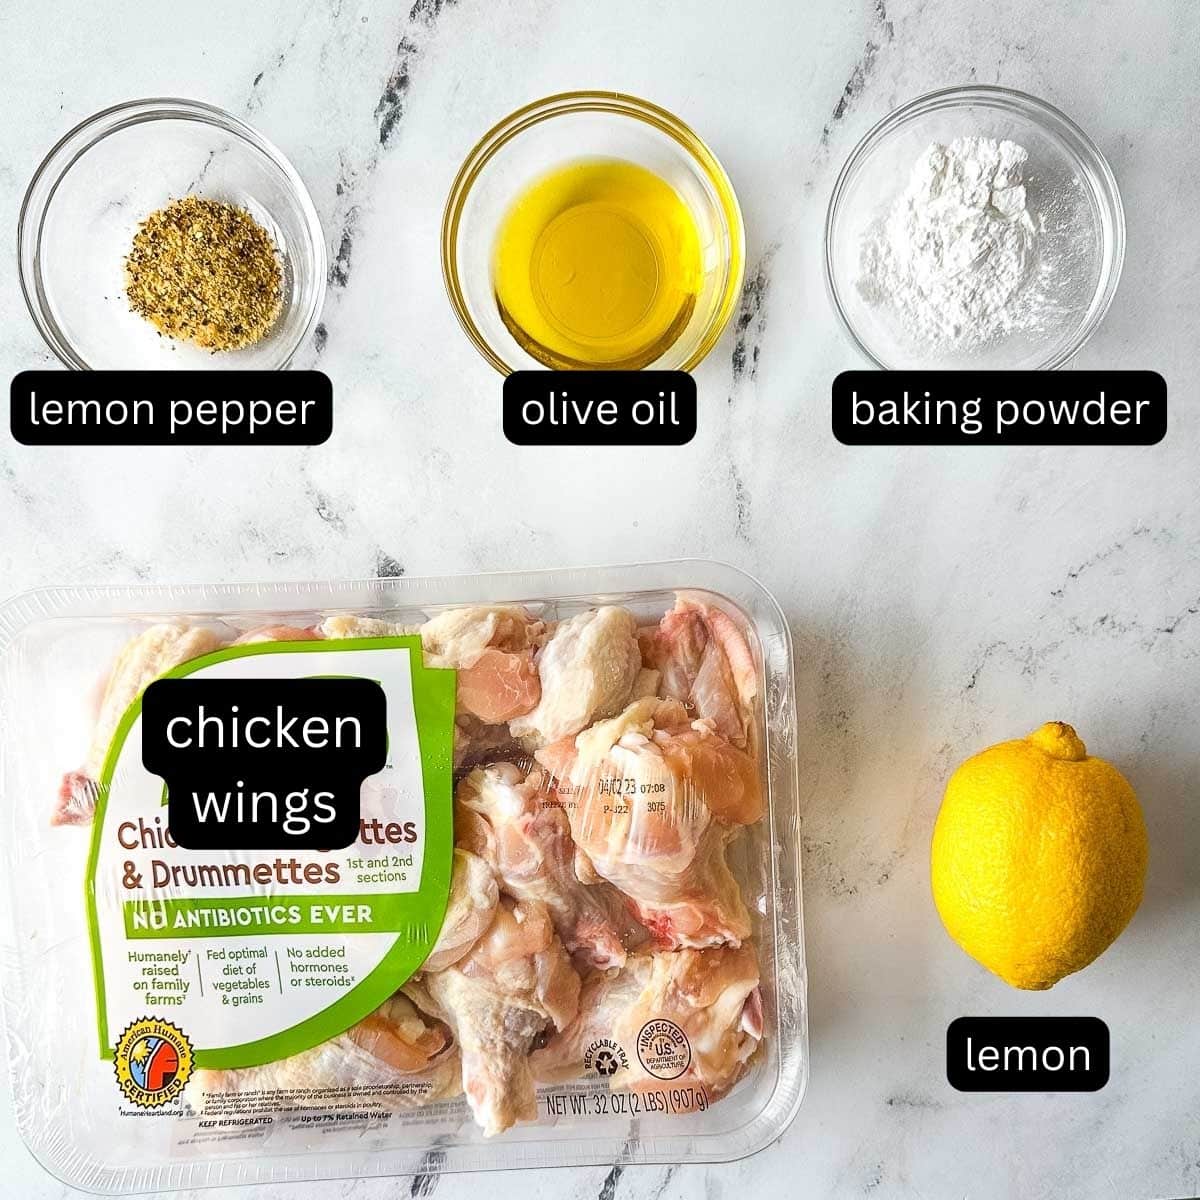 labeled ingredients for lemon pepper wings.